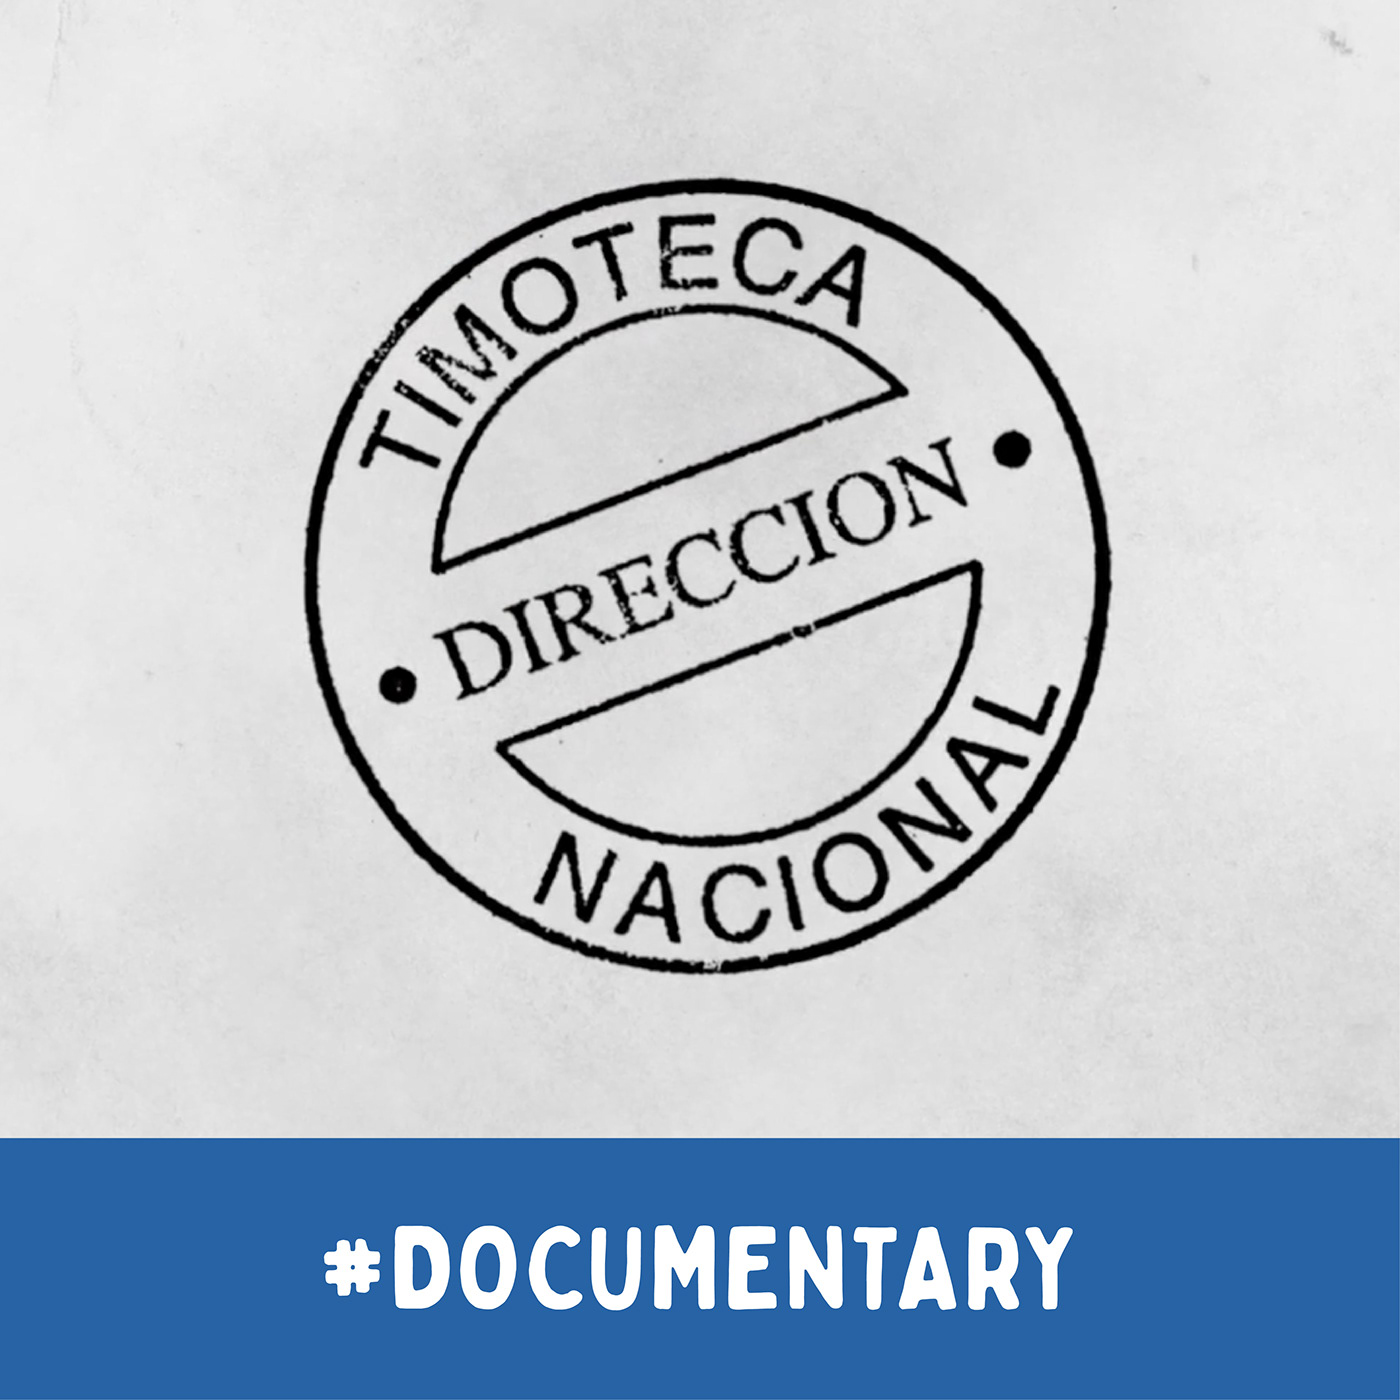 Biopic documental ELCASO ENRIQUERUBIO Periodismo sucesos teaser TIMOTECA TIMOTECANACIONAL tomassastre